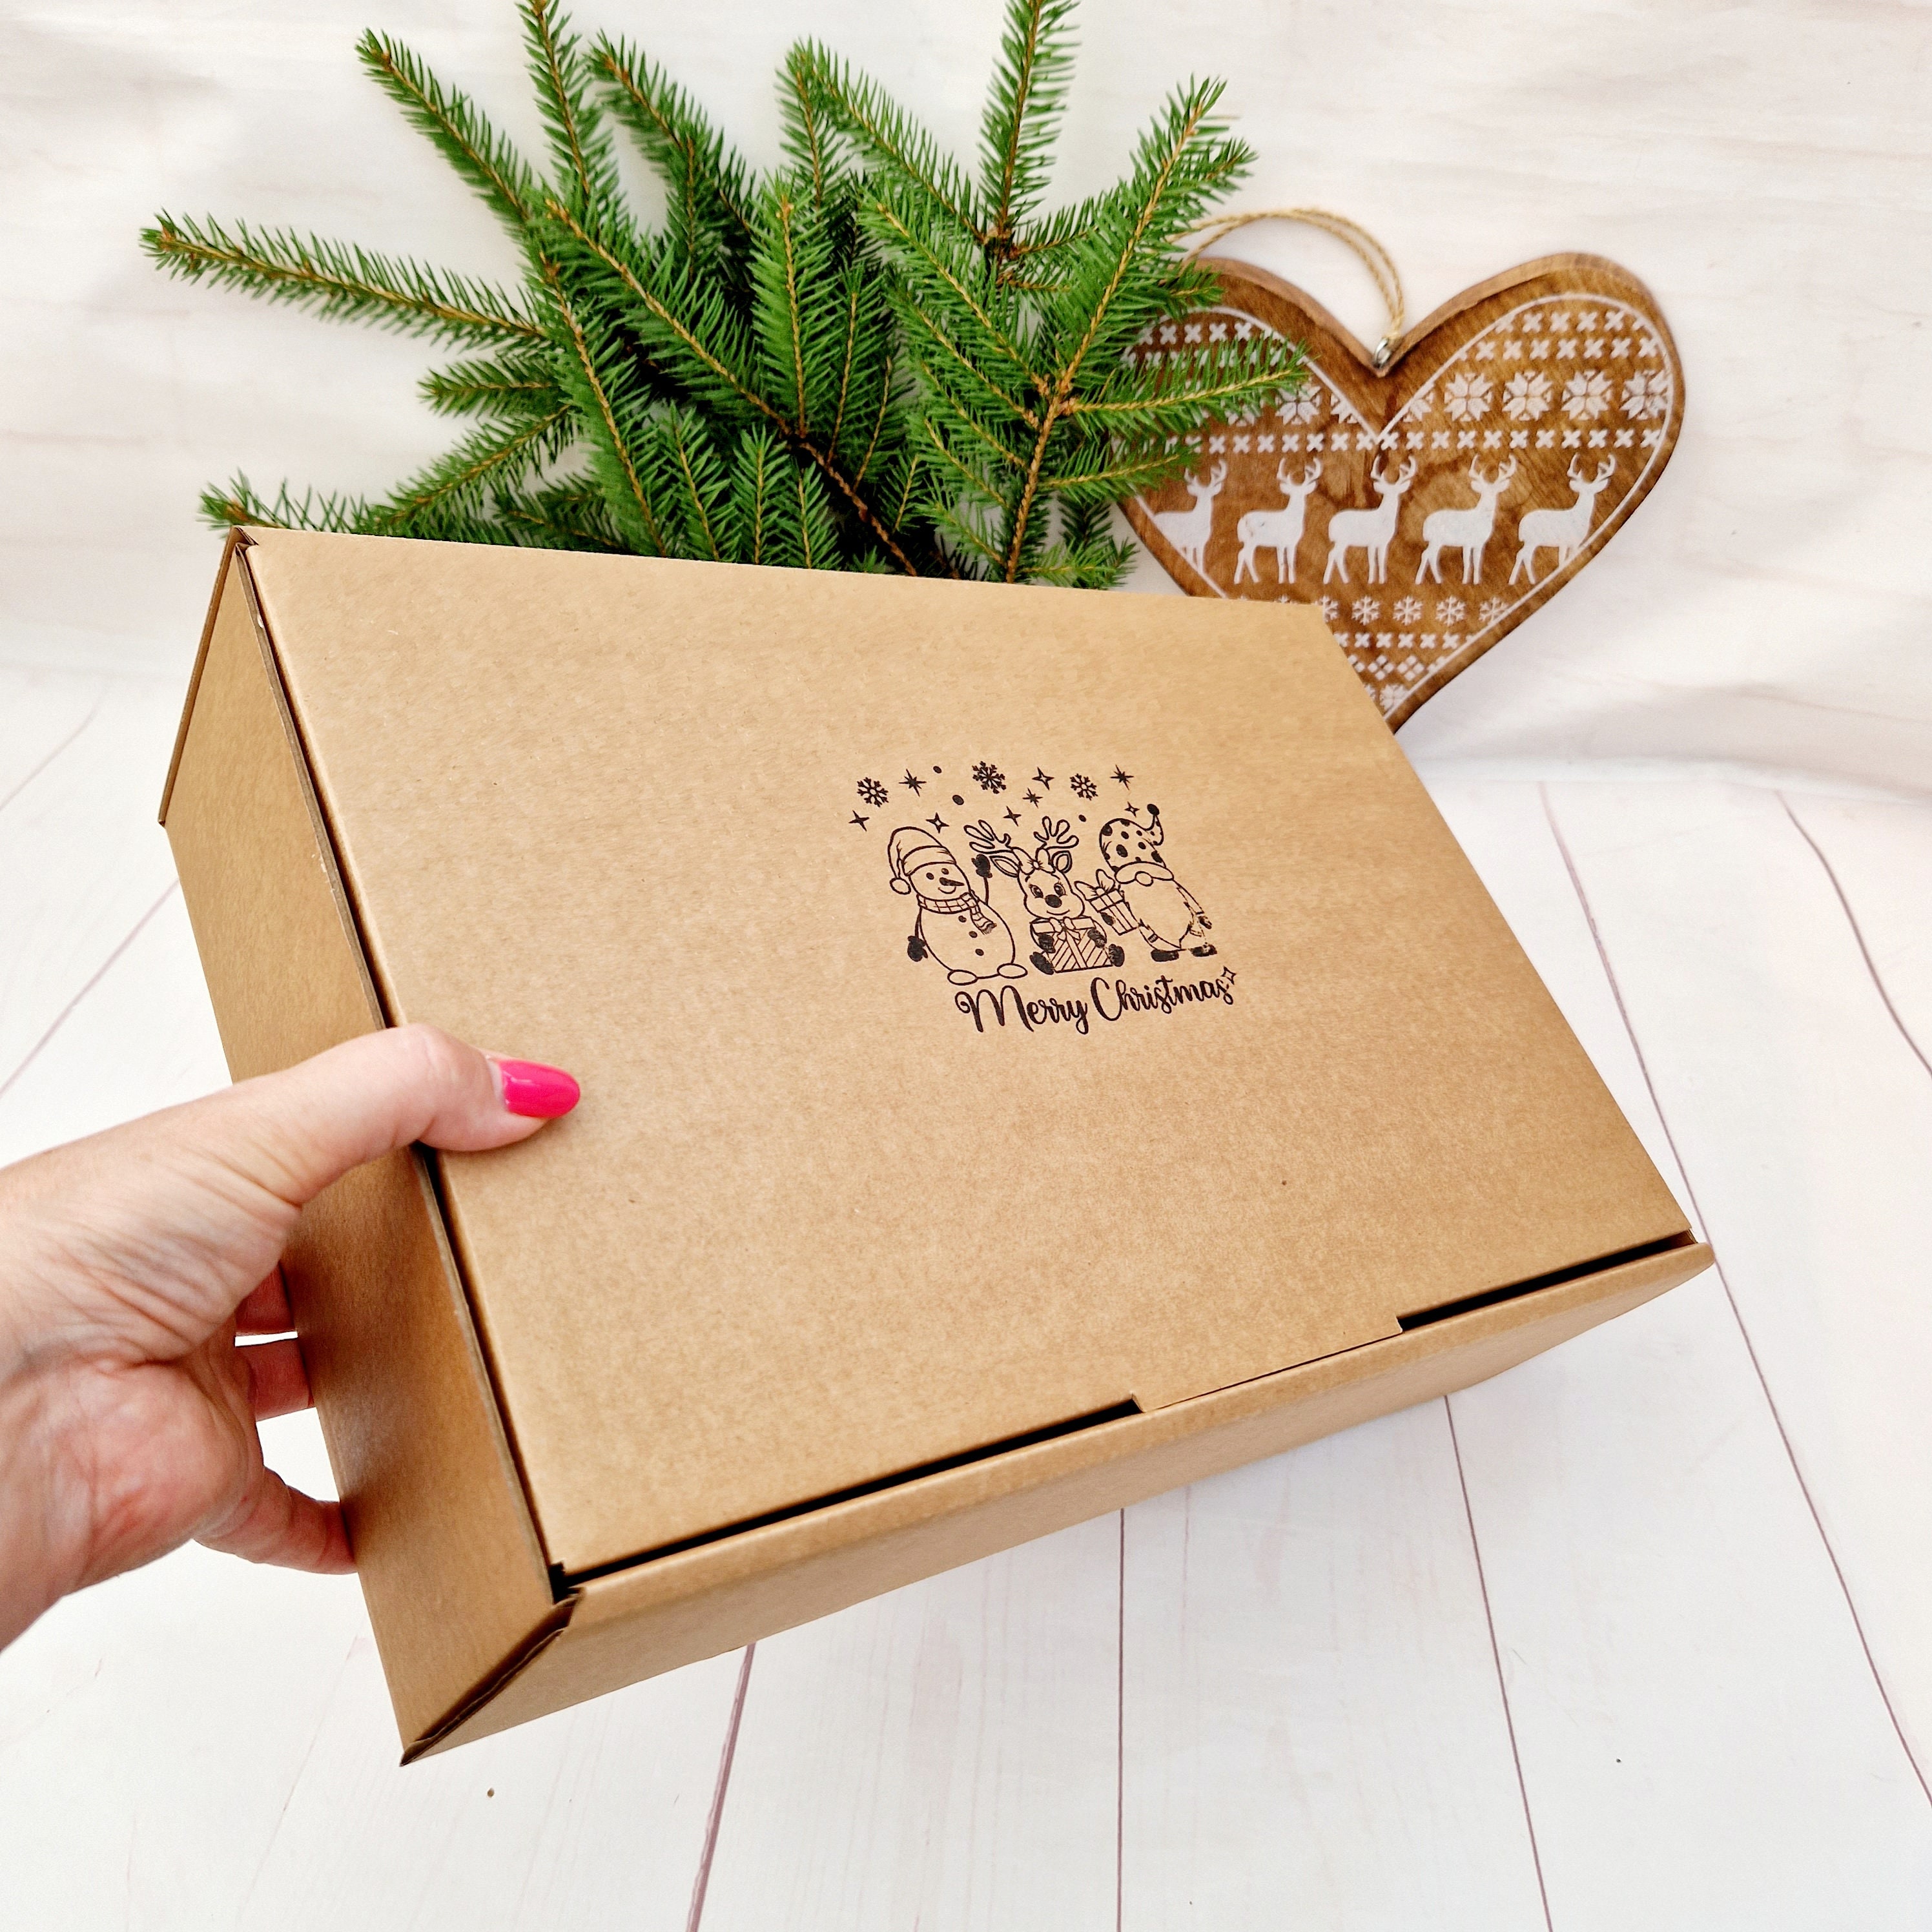 10 Gift Boxes, Small Jewelry Gift Box, Kraft Gift Box, Robins Egg